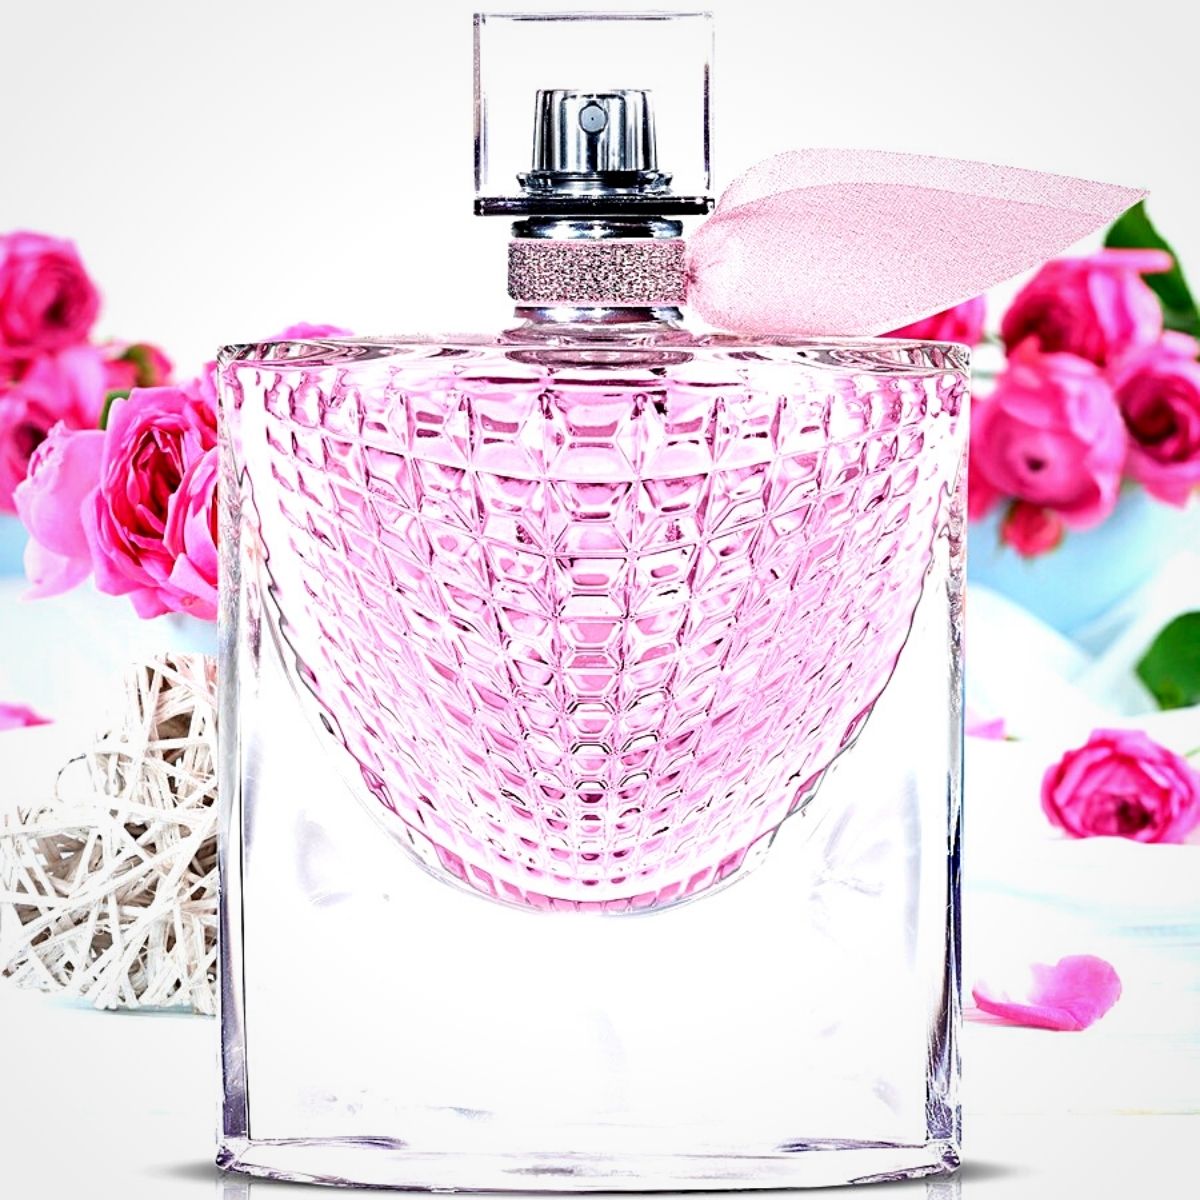 Rose Centifolia used for Lancôme’s perfumes